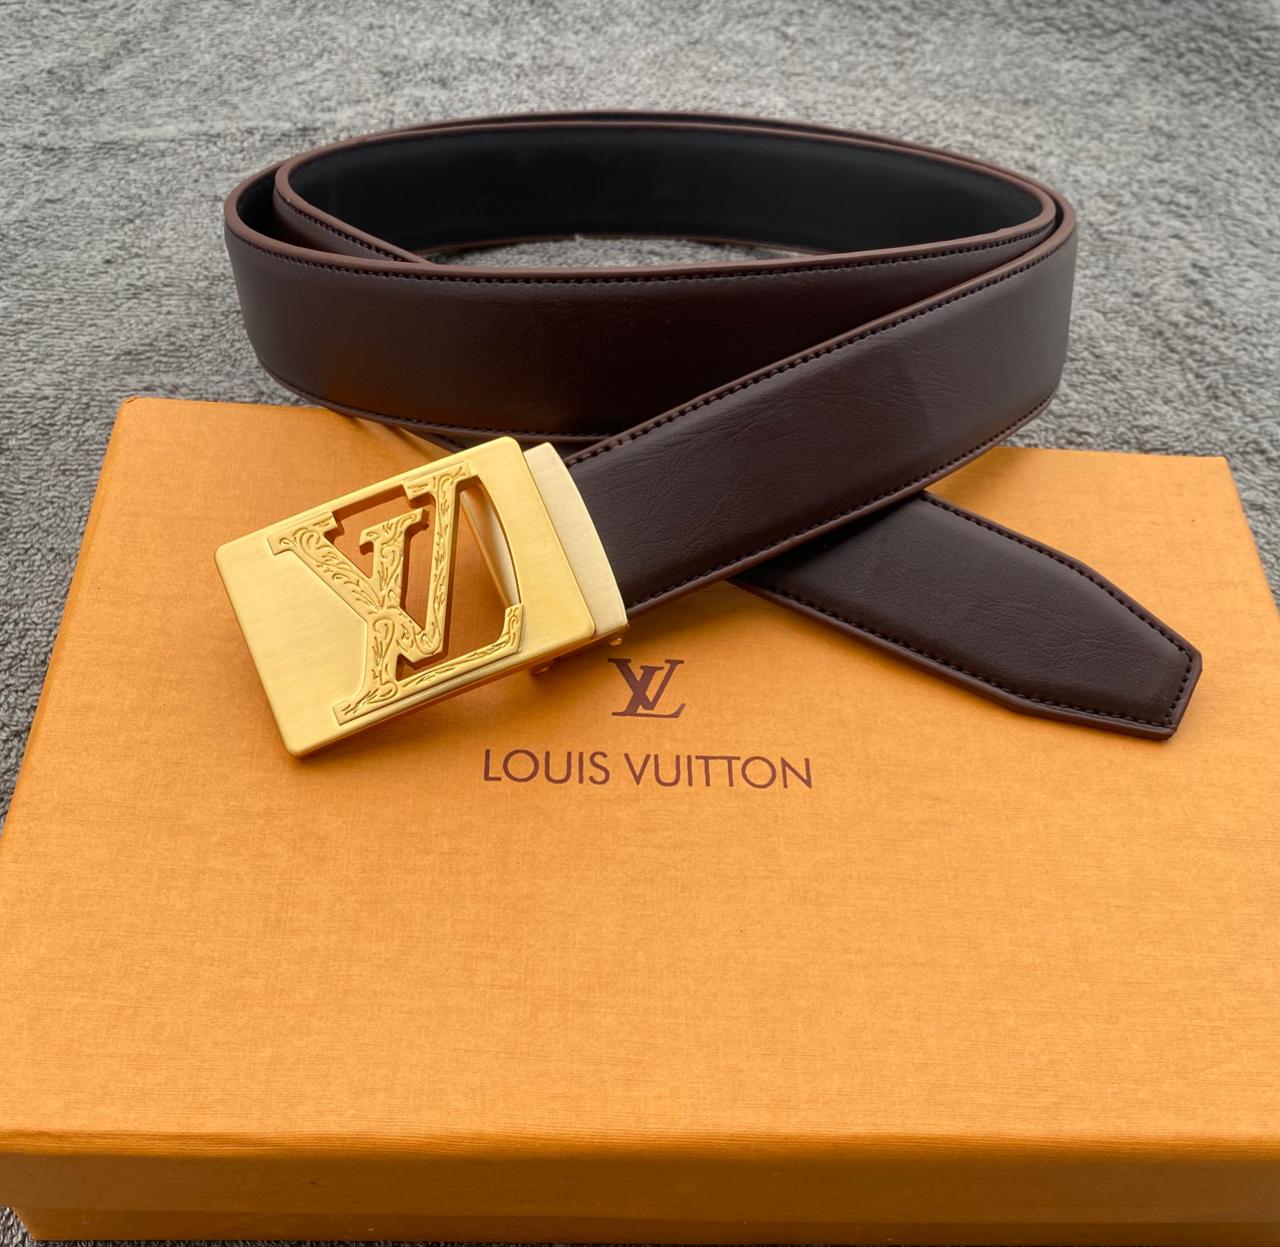 LOUIS VUITTON Premium Quality Belt » Buy online from ShopnSafe